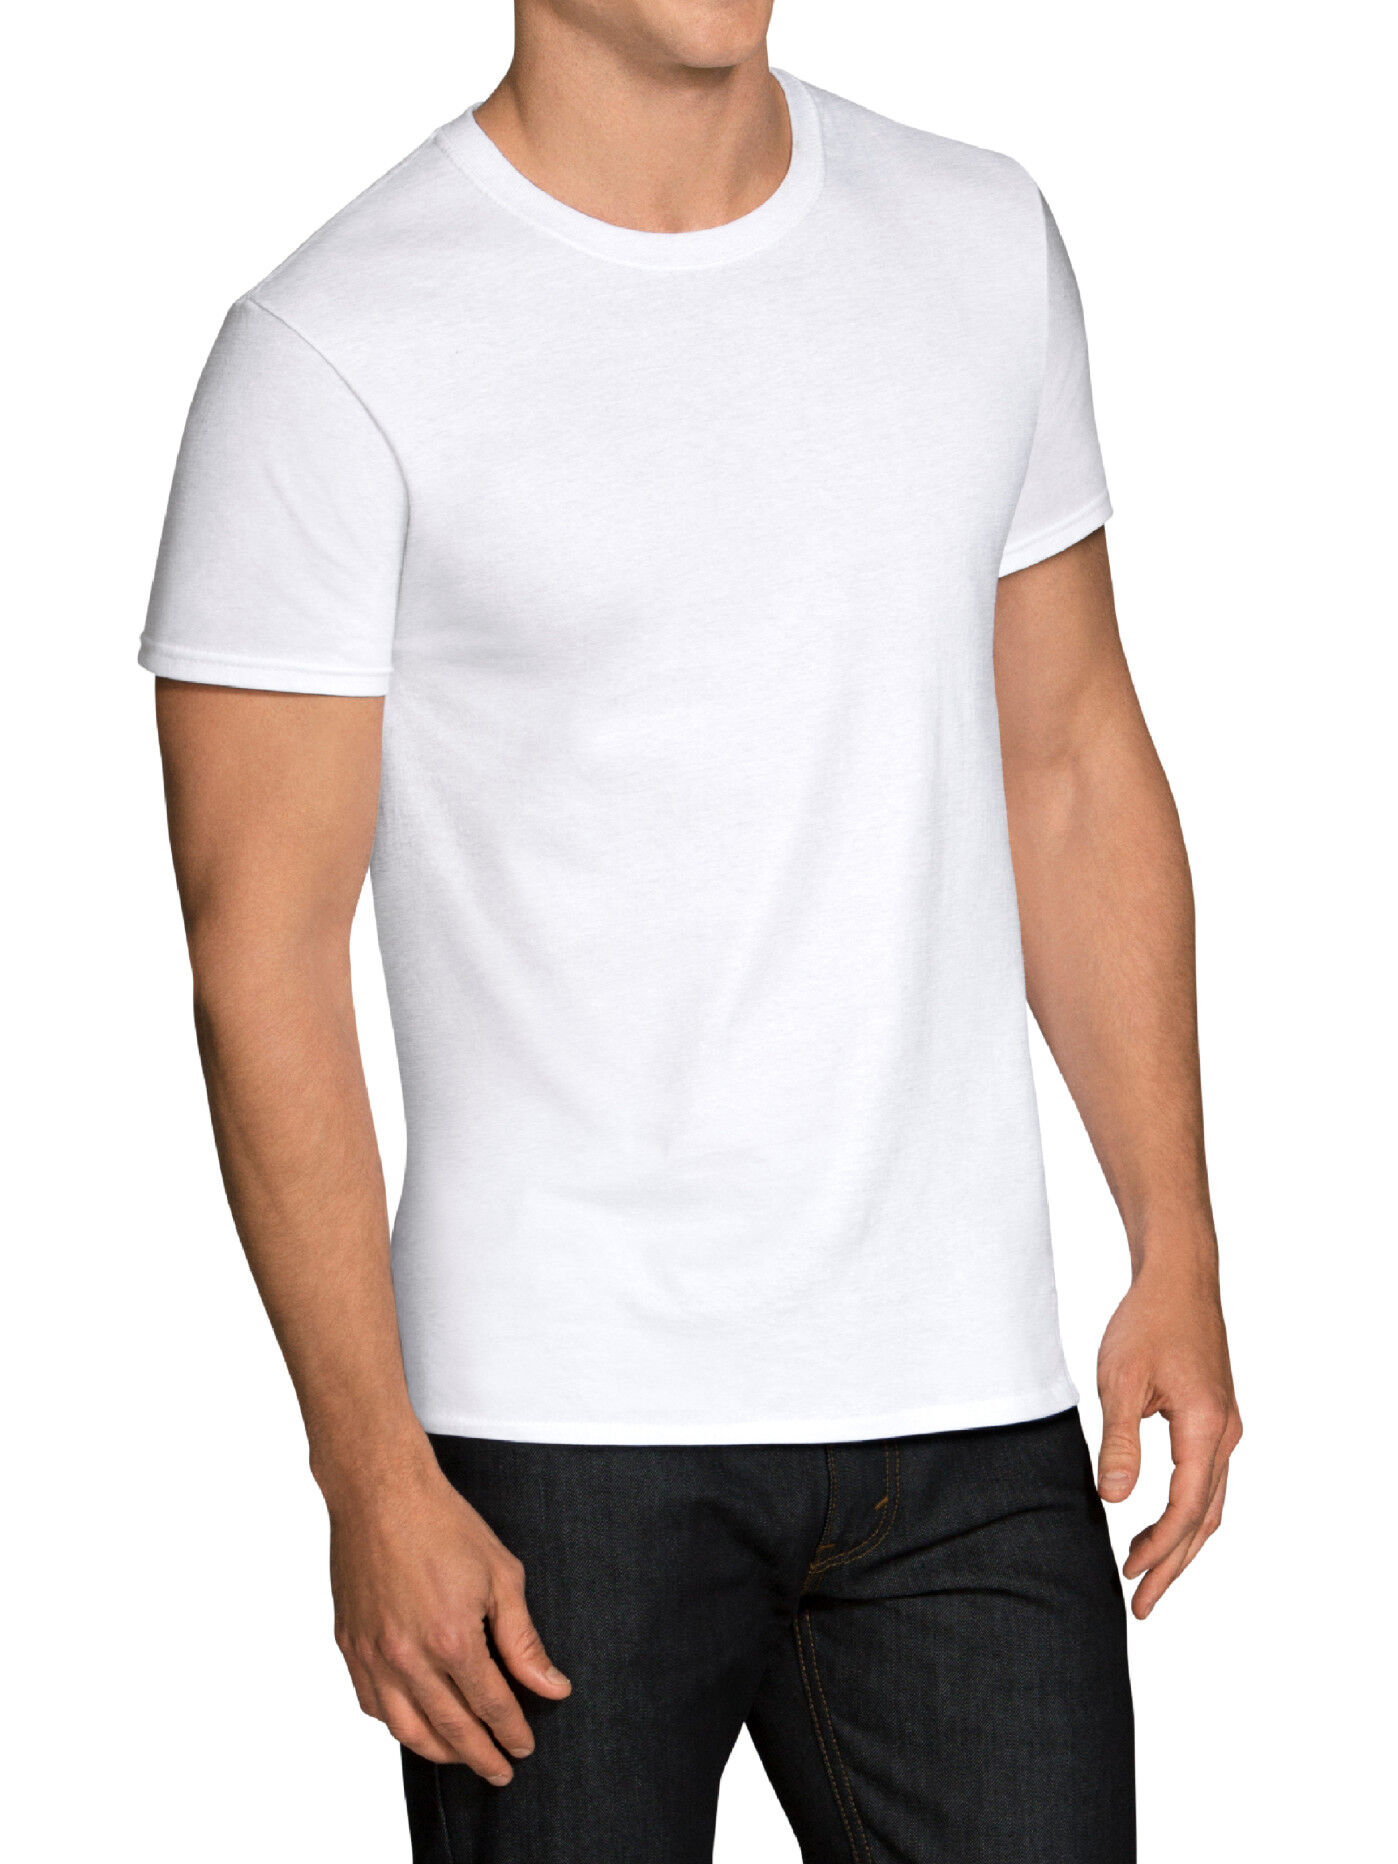 Men's Short Sleeve White Crew T-Shirts 